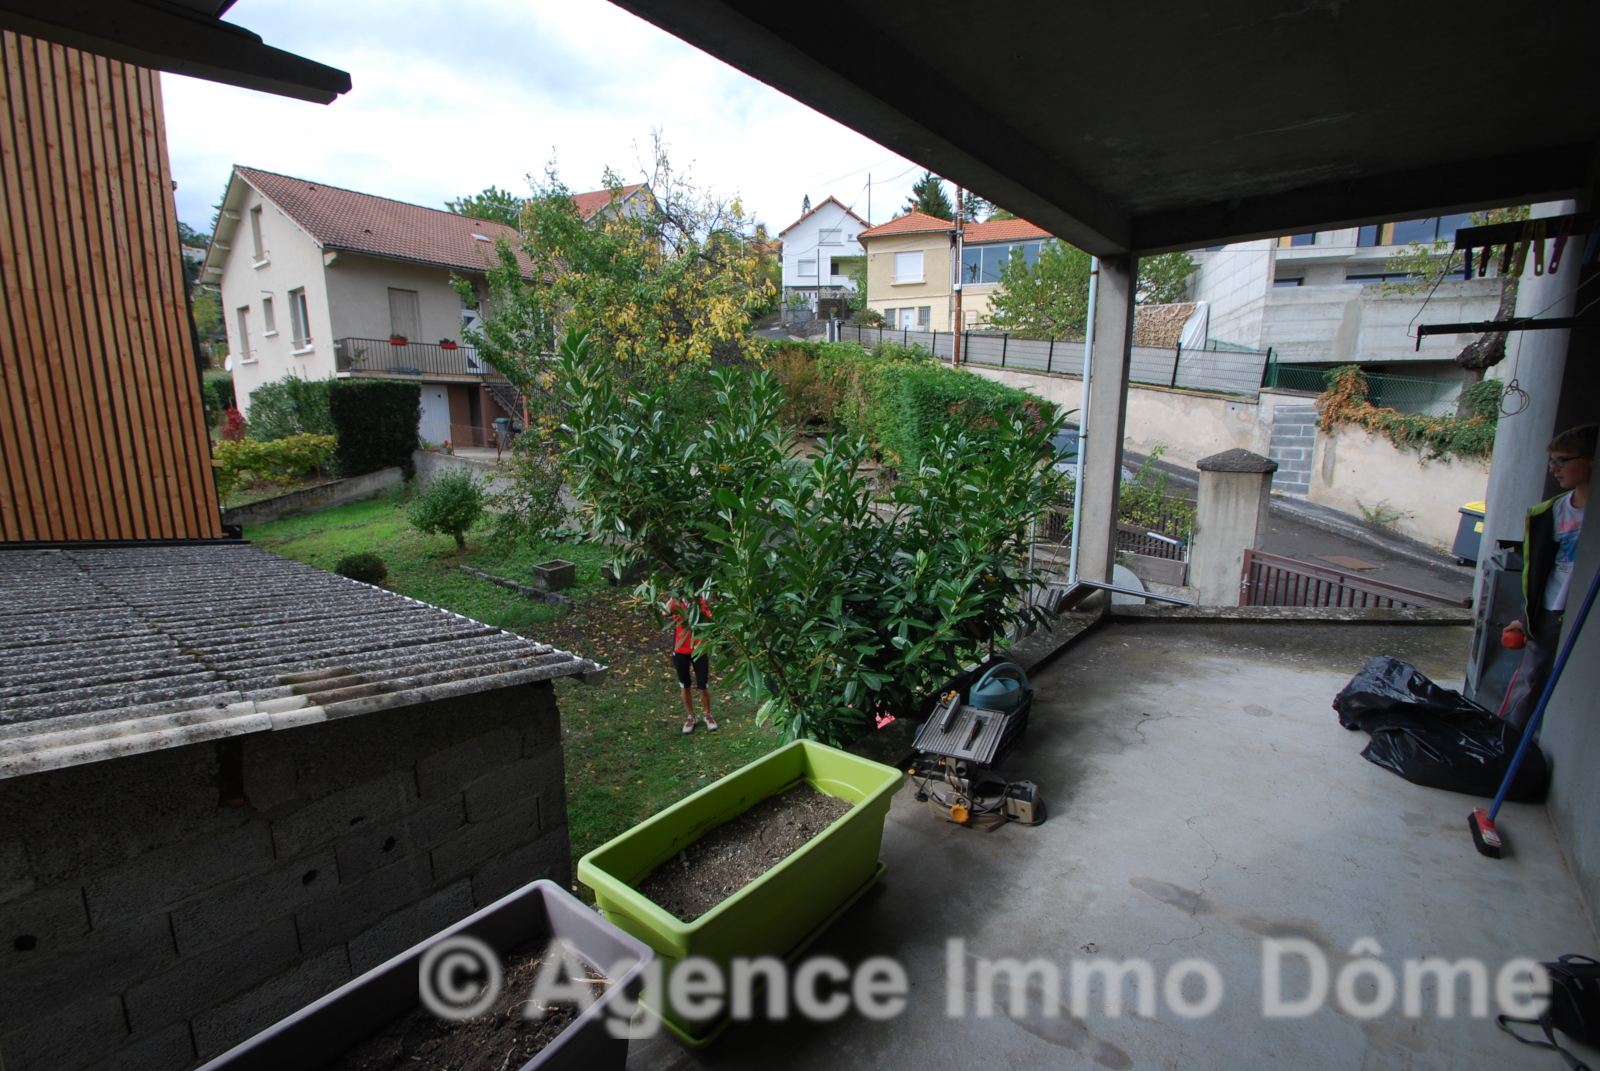 Appart 4 pièces, 85 m², jardin, terrasses, garage.